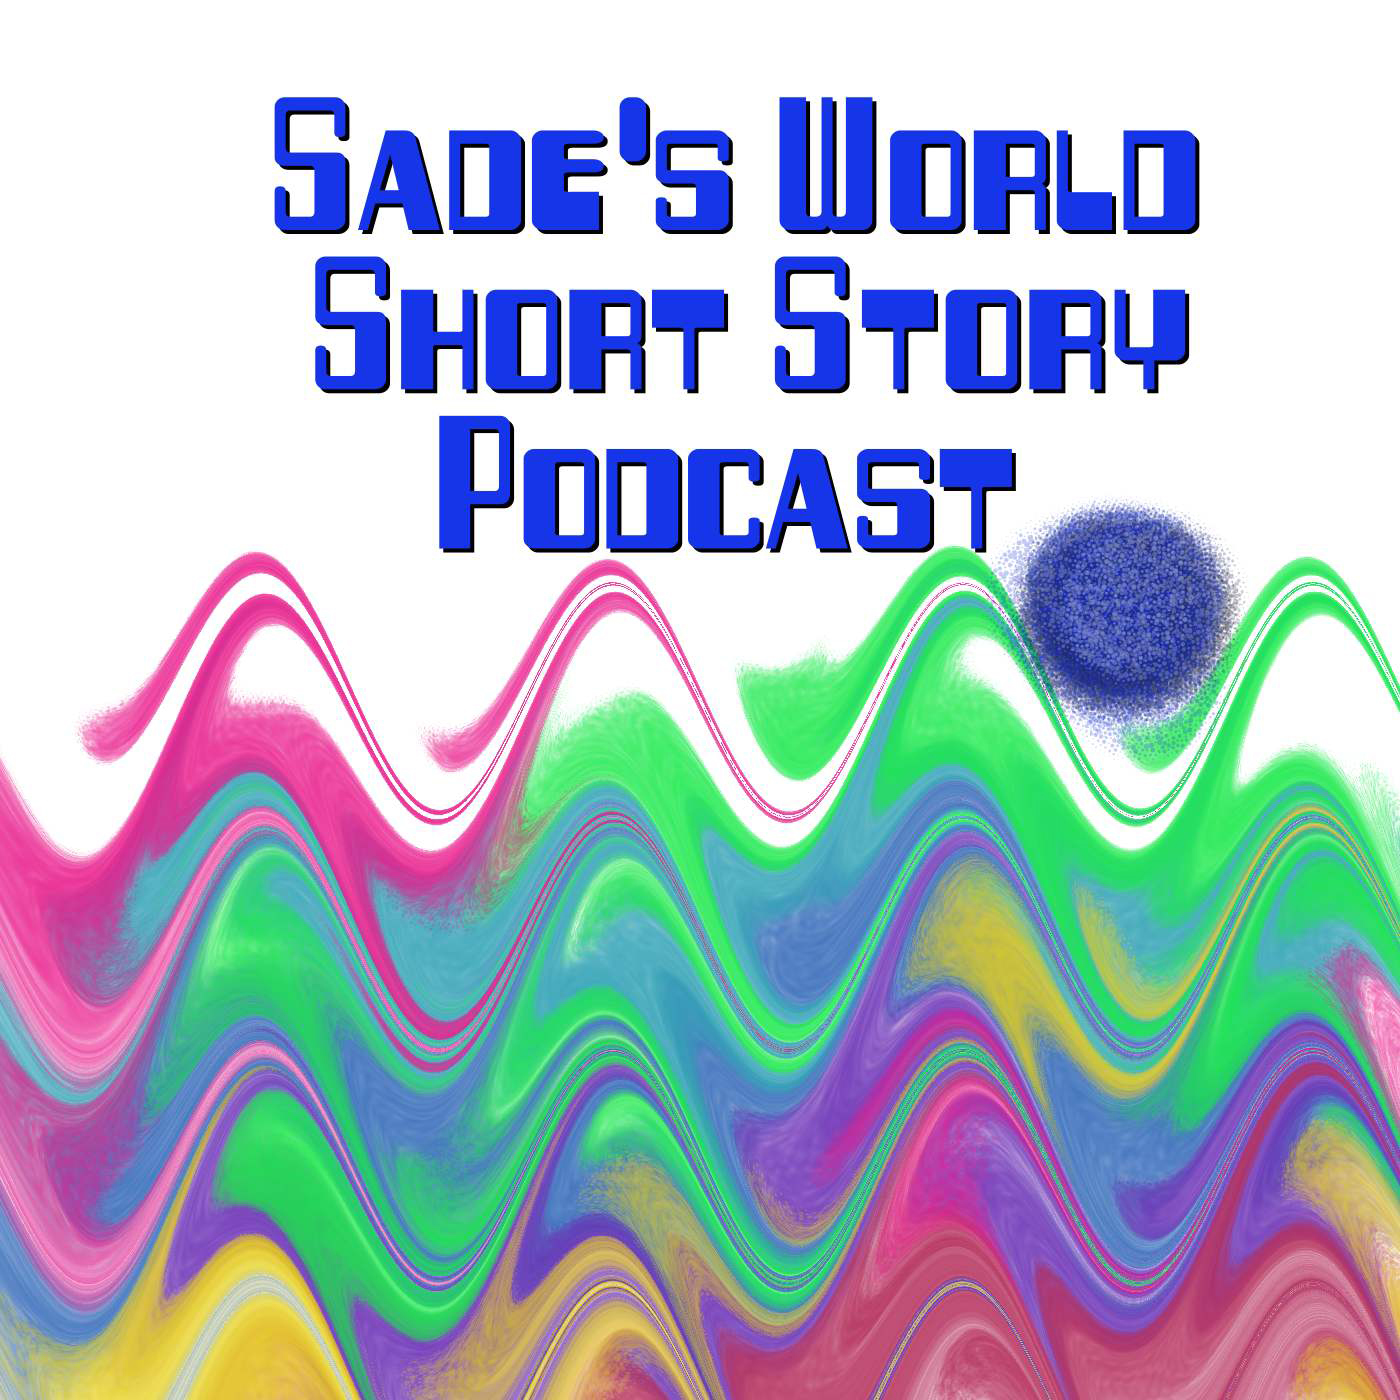 Sade's World Short Story Podcast